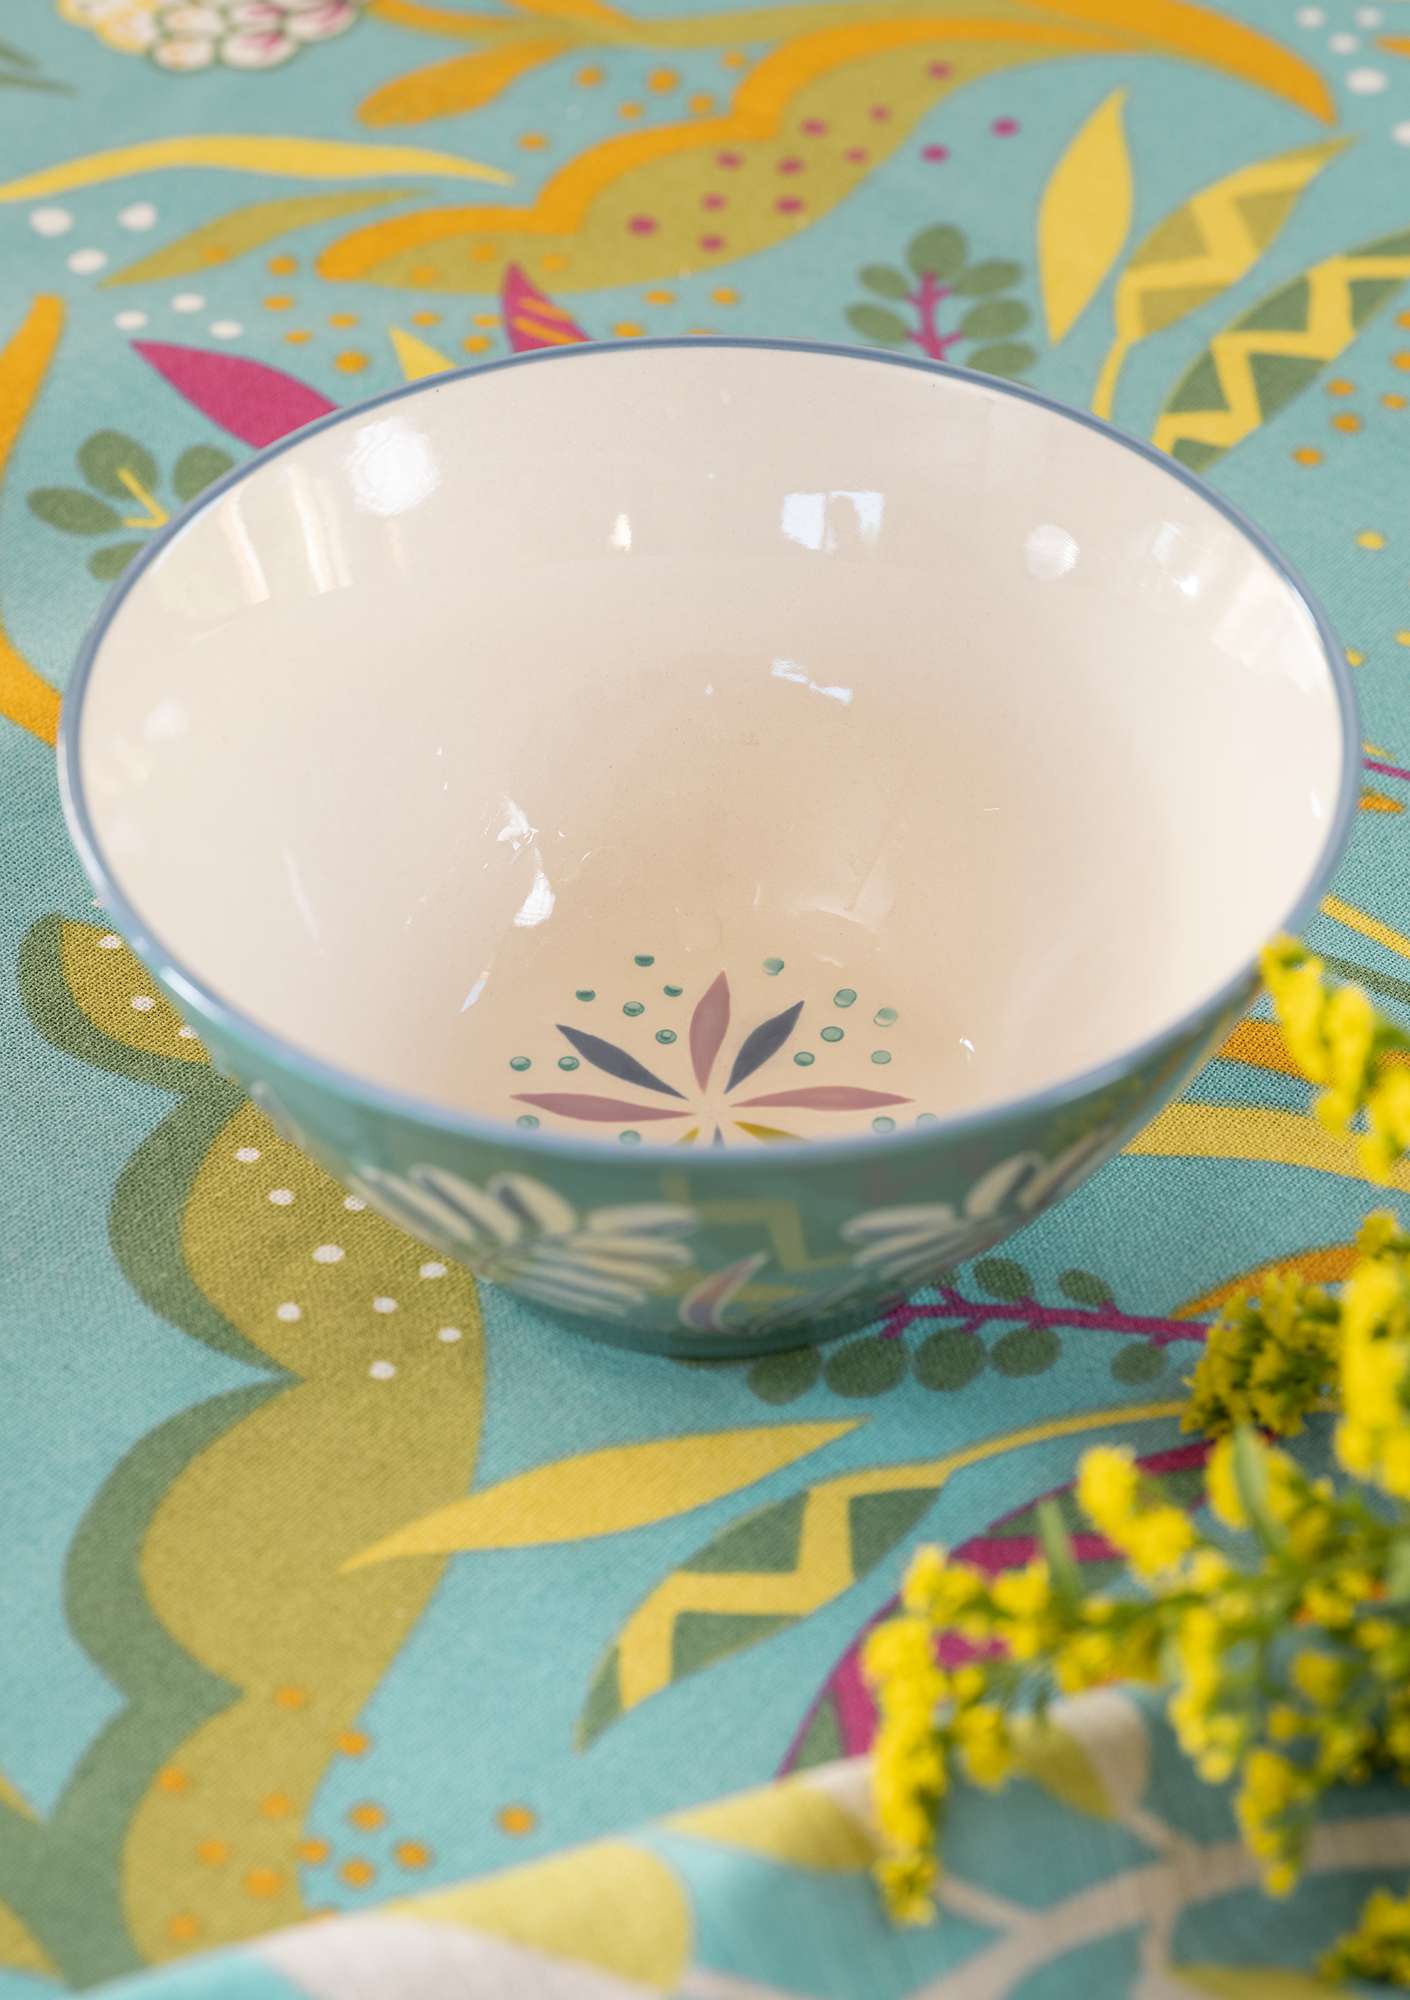 “Meadow” ceramic bowl meadow brook